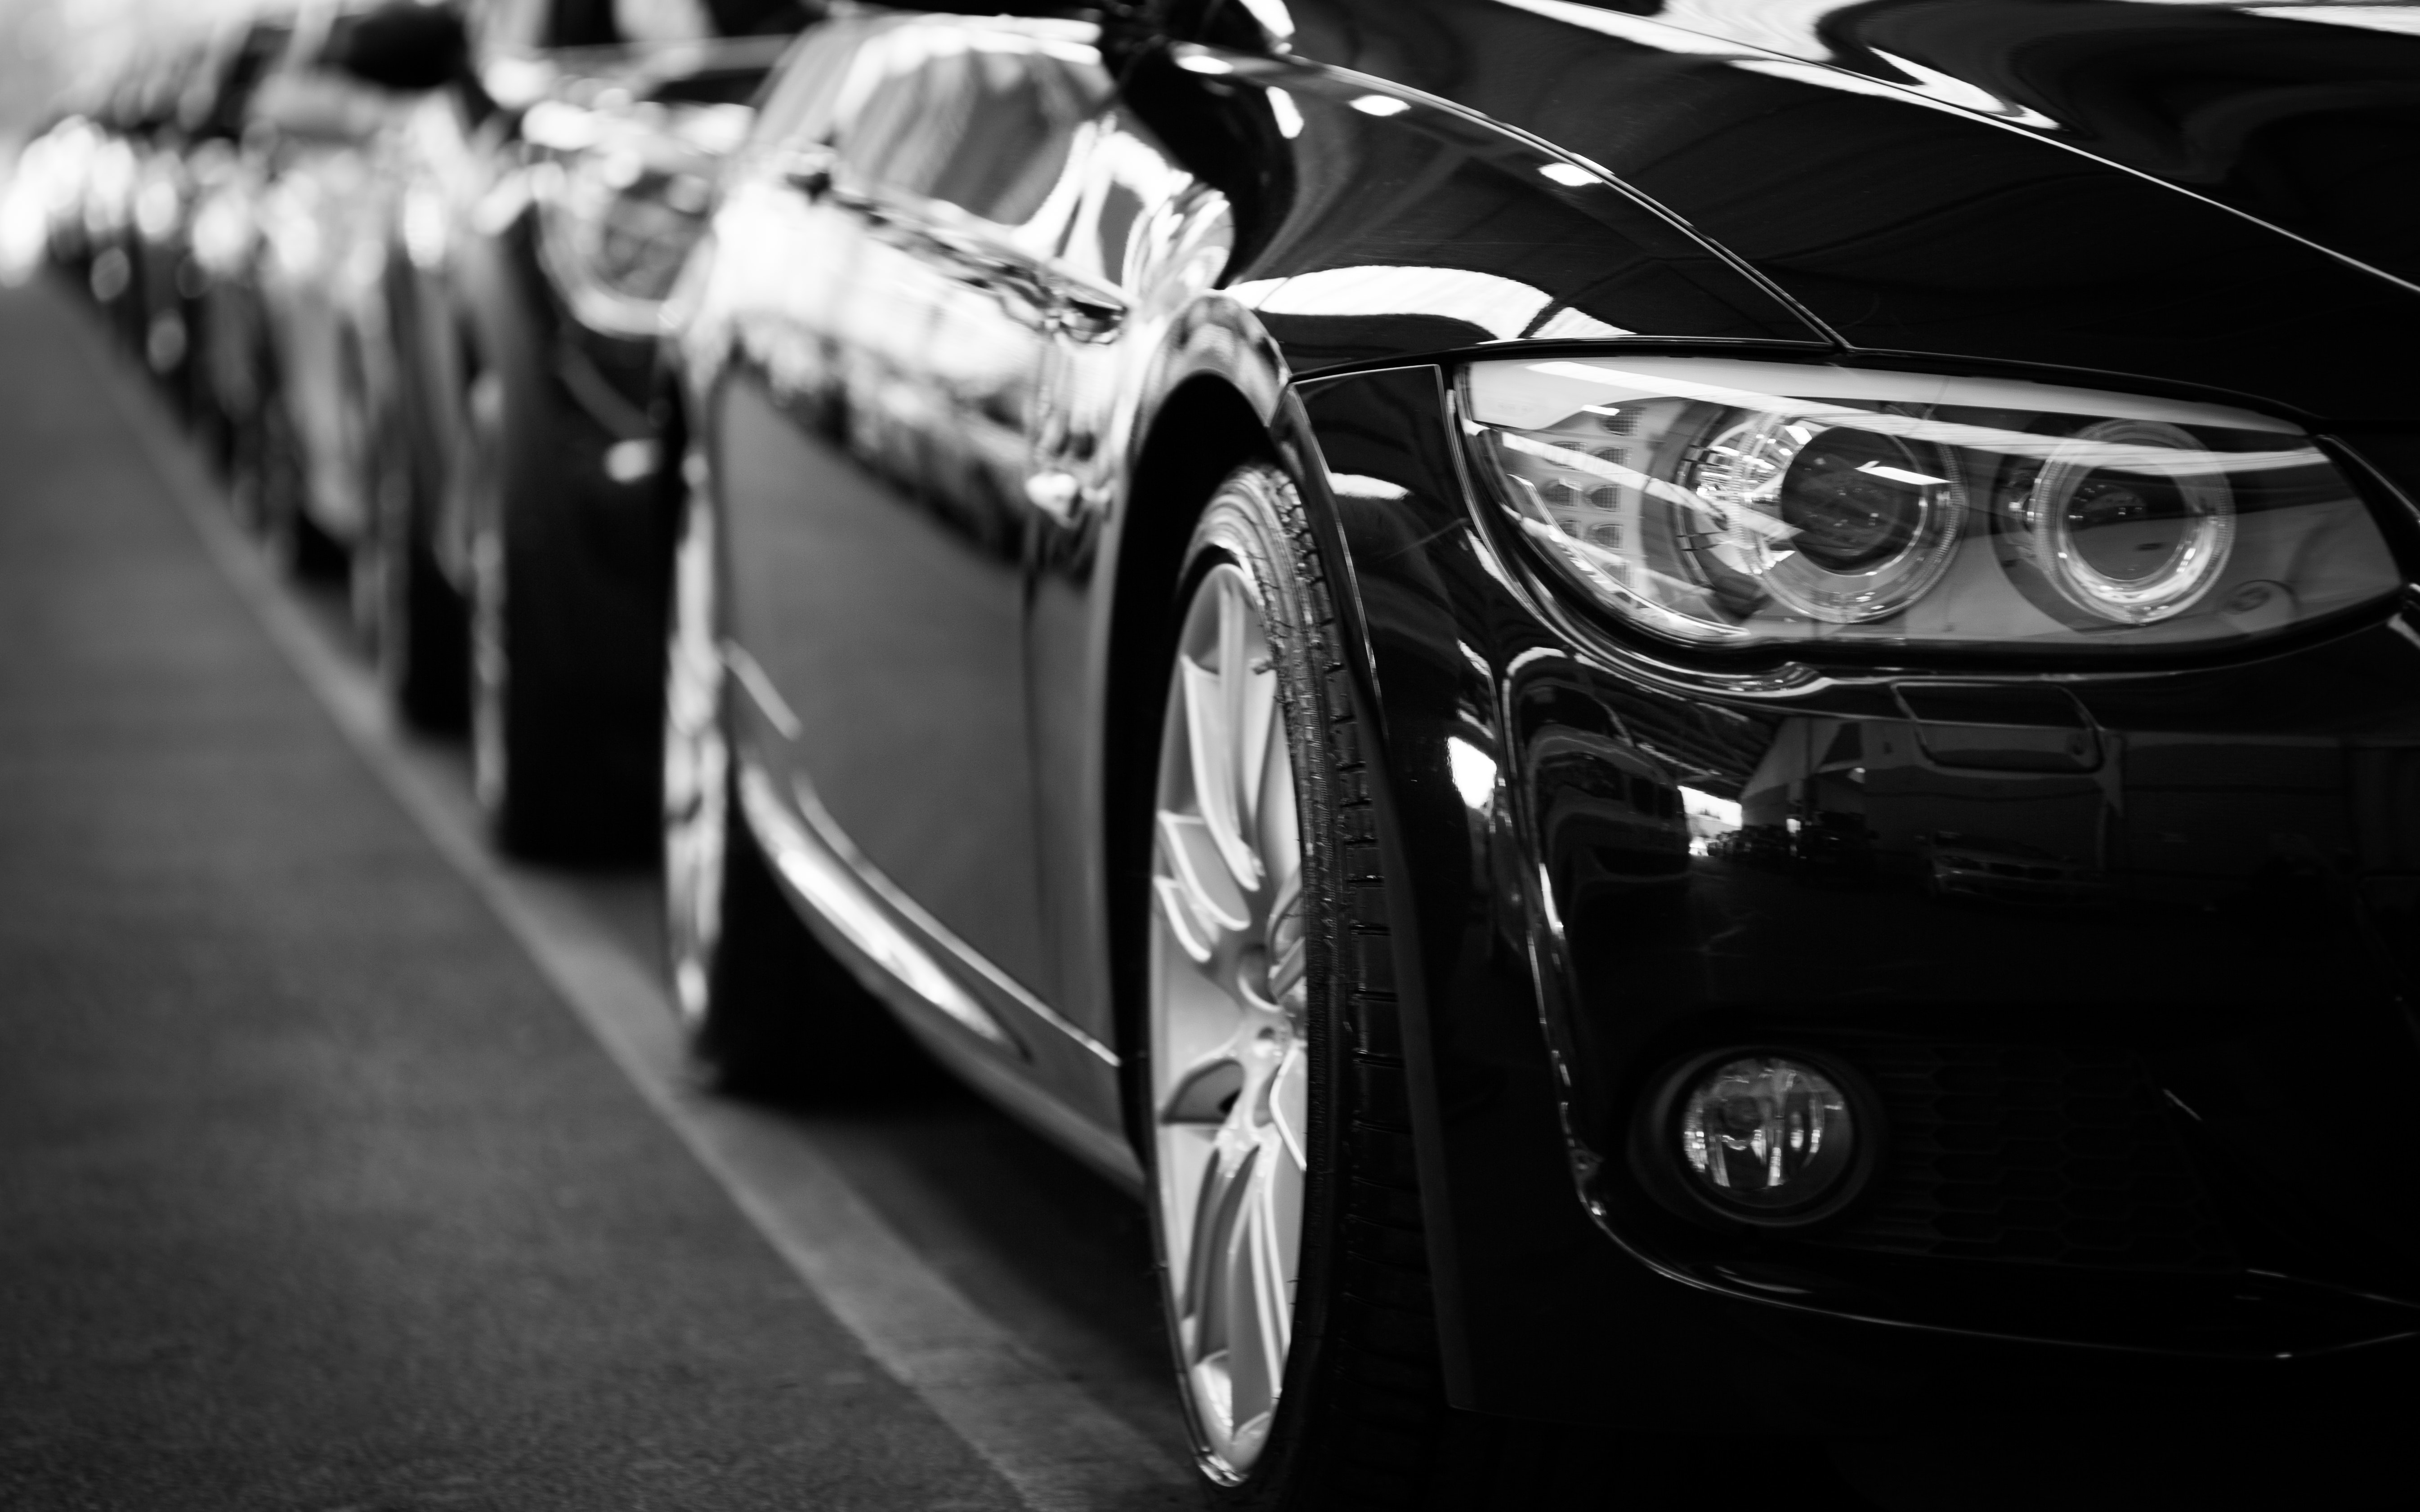 Free stock photo of automobiles, automotives, black and white